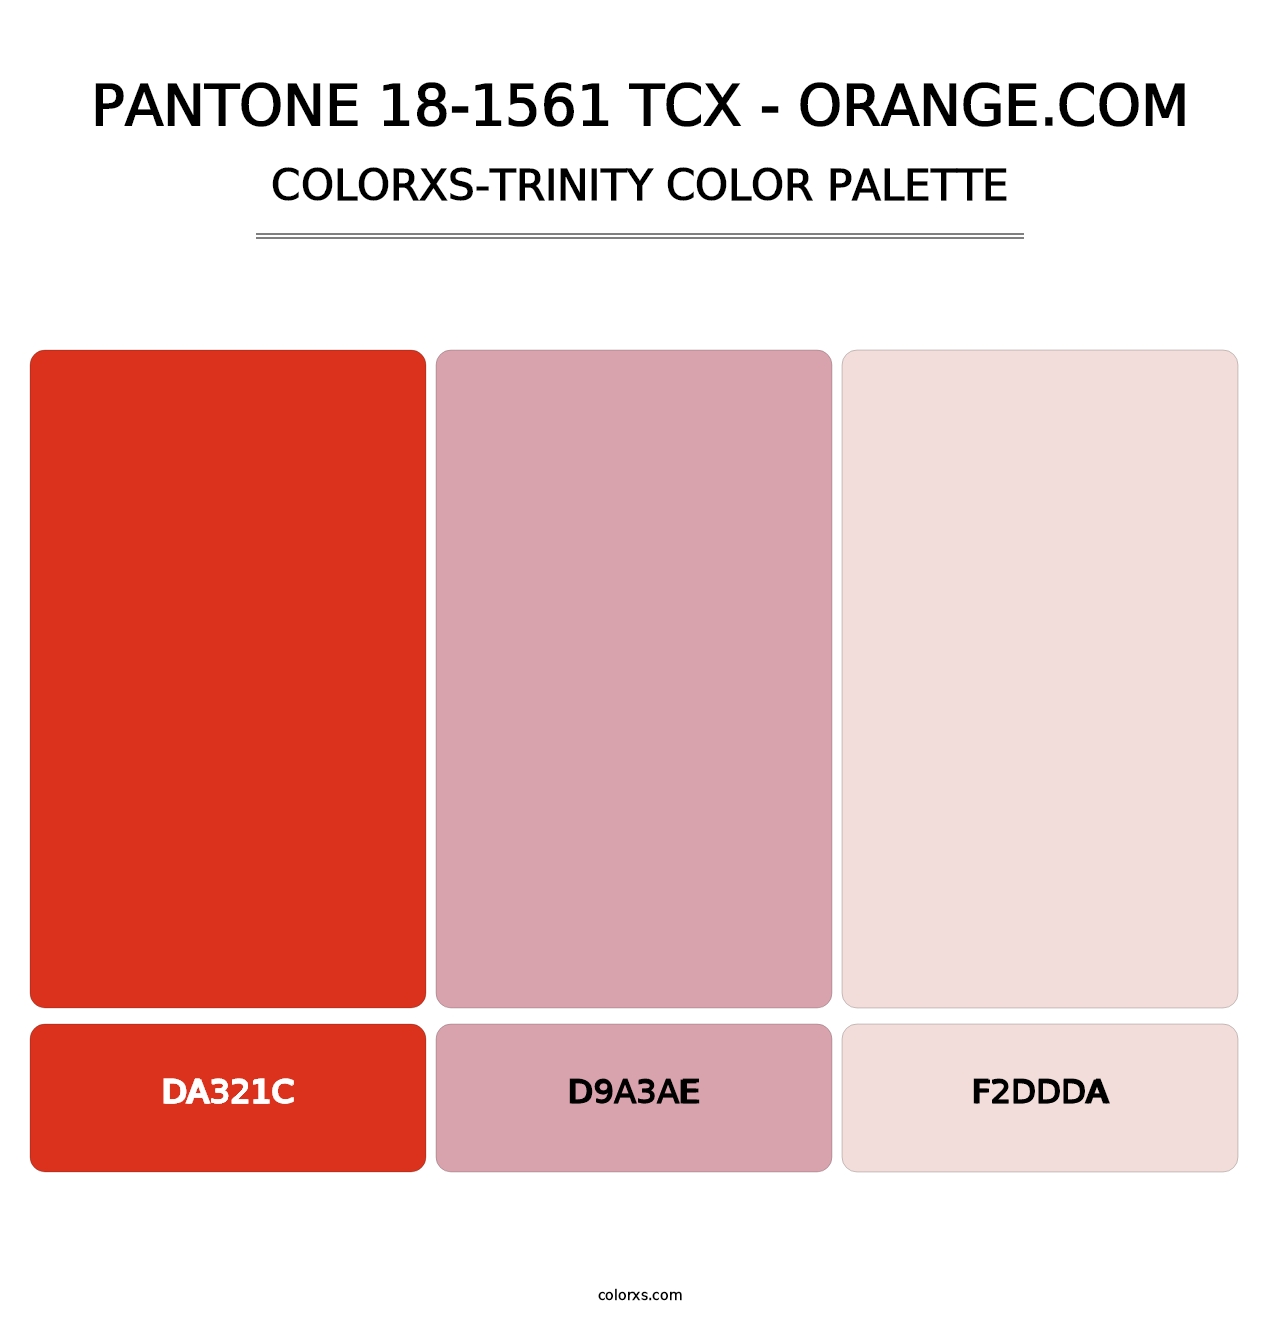 PANTONE 18-1561 TCX - Orange.com - Colorxs Trinity Palette